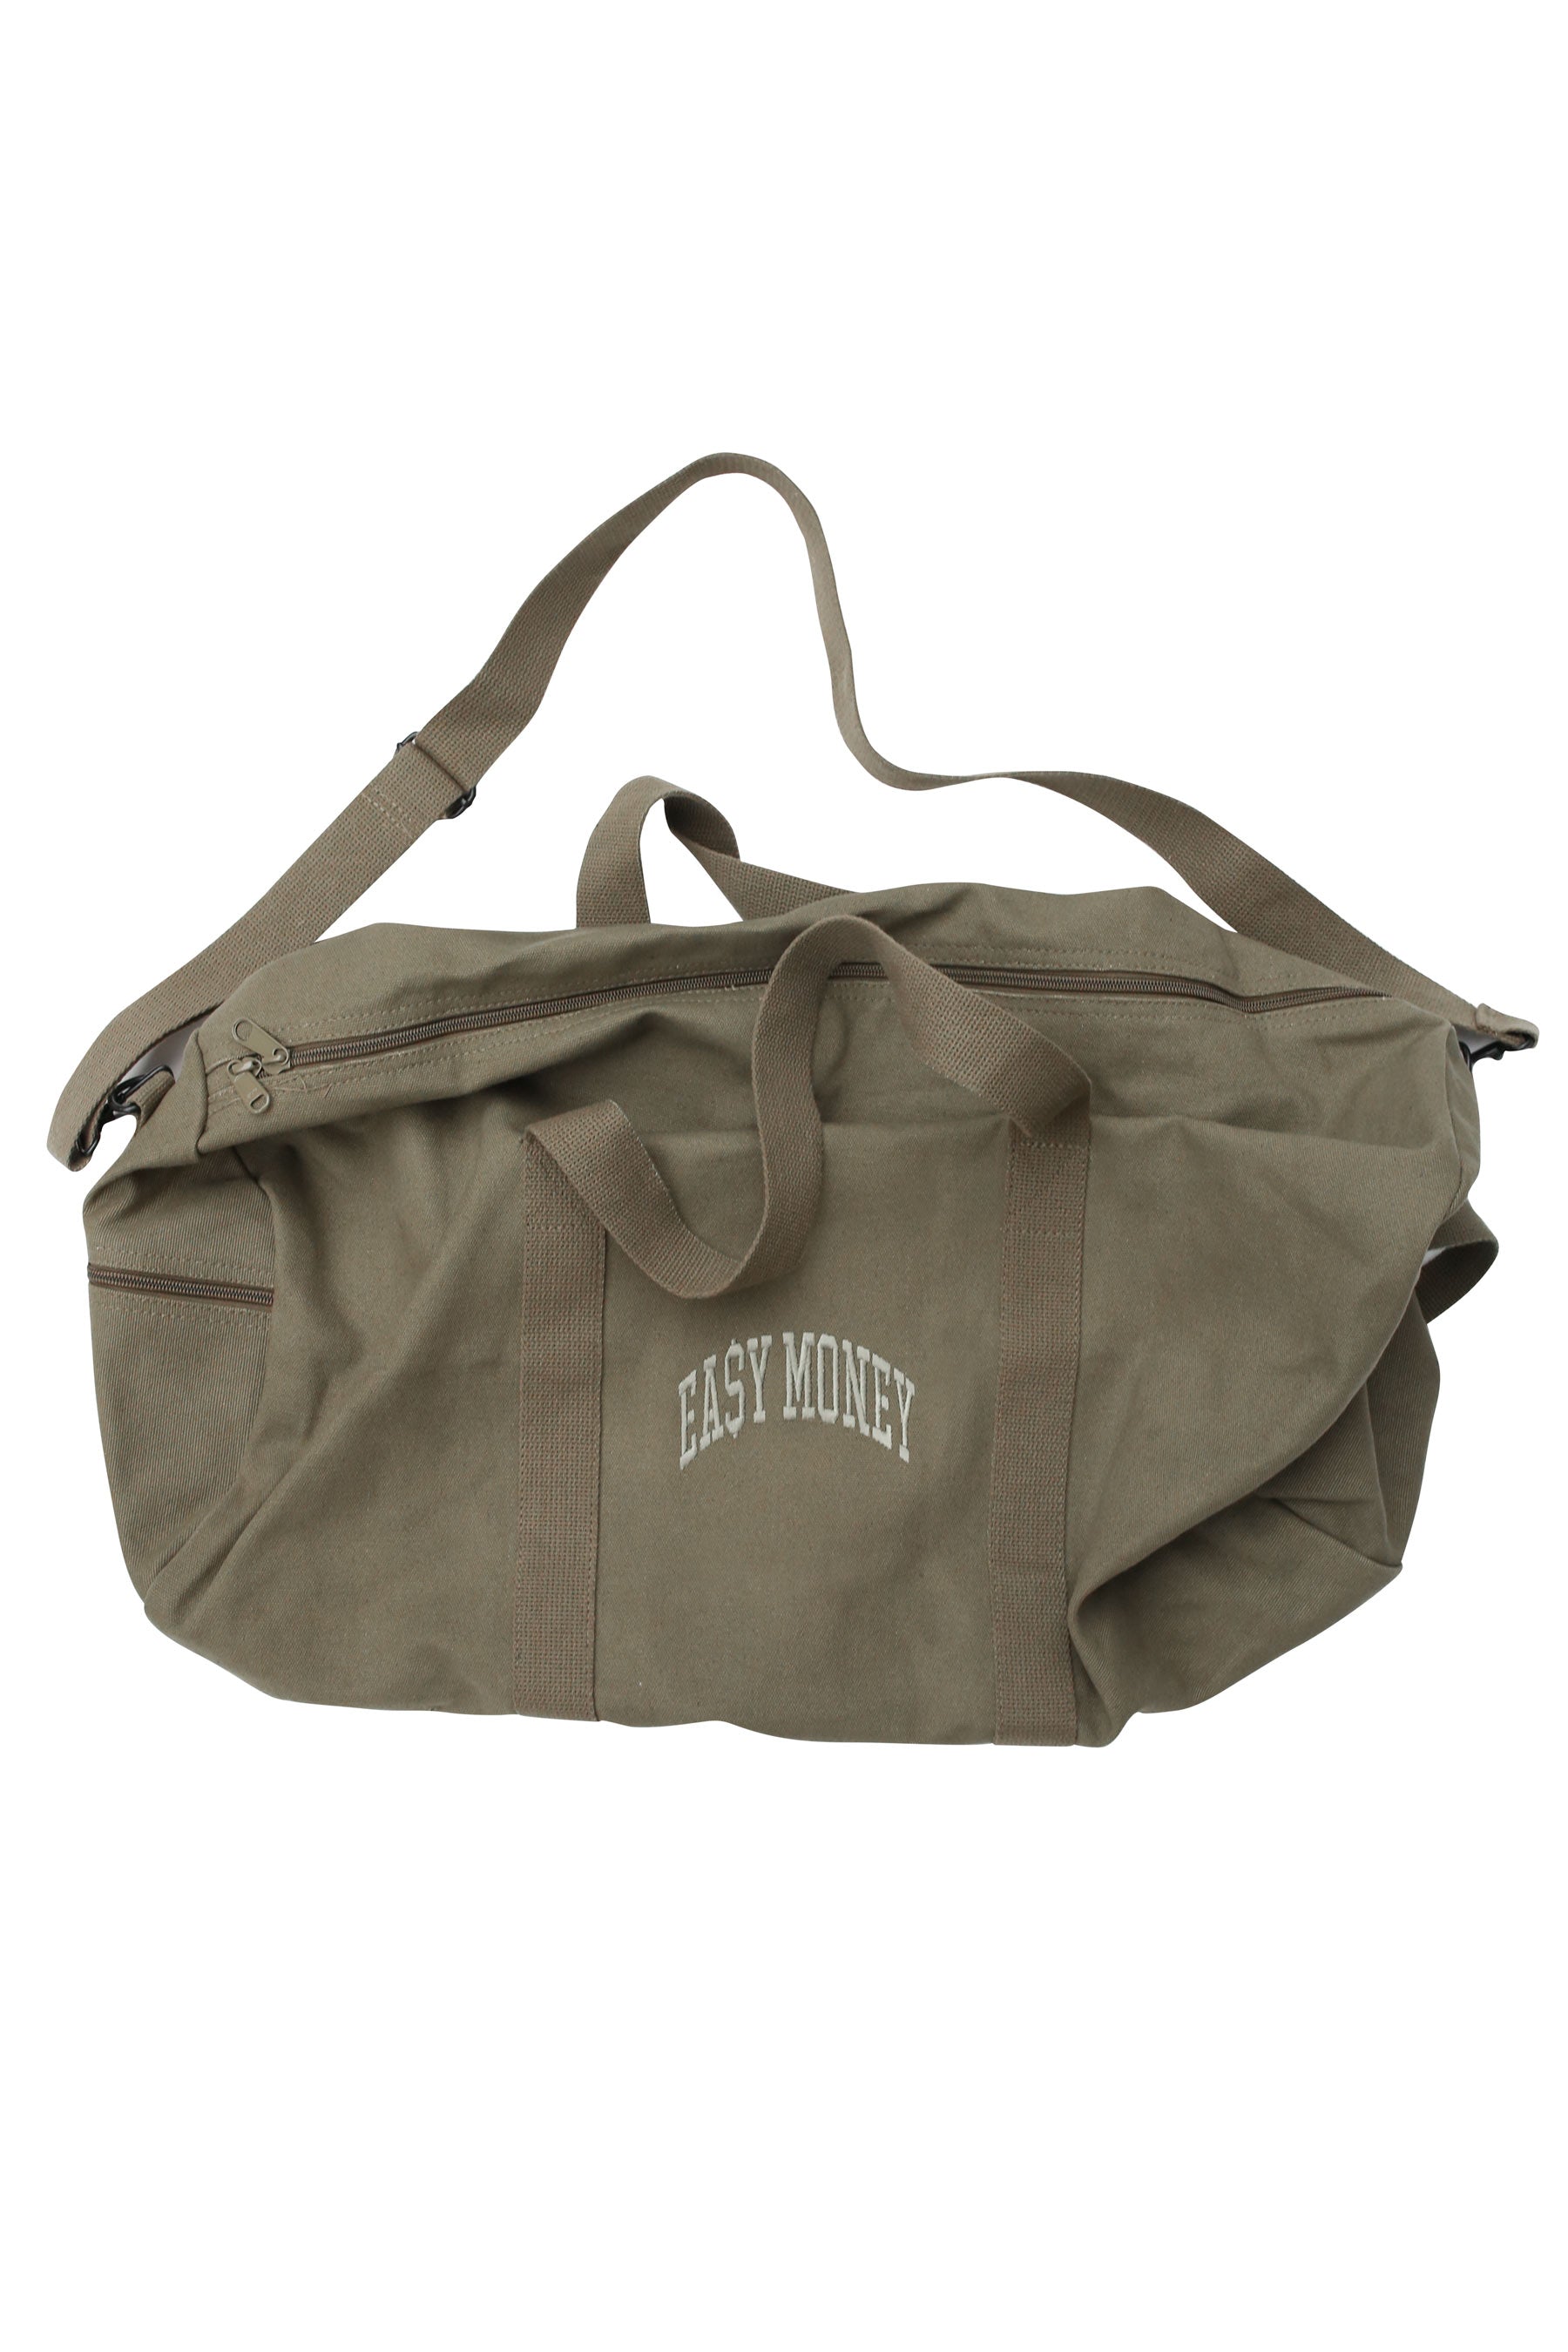 Green EA$Y Duffle Bag